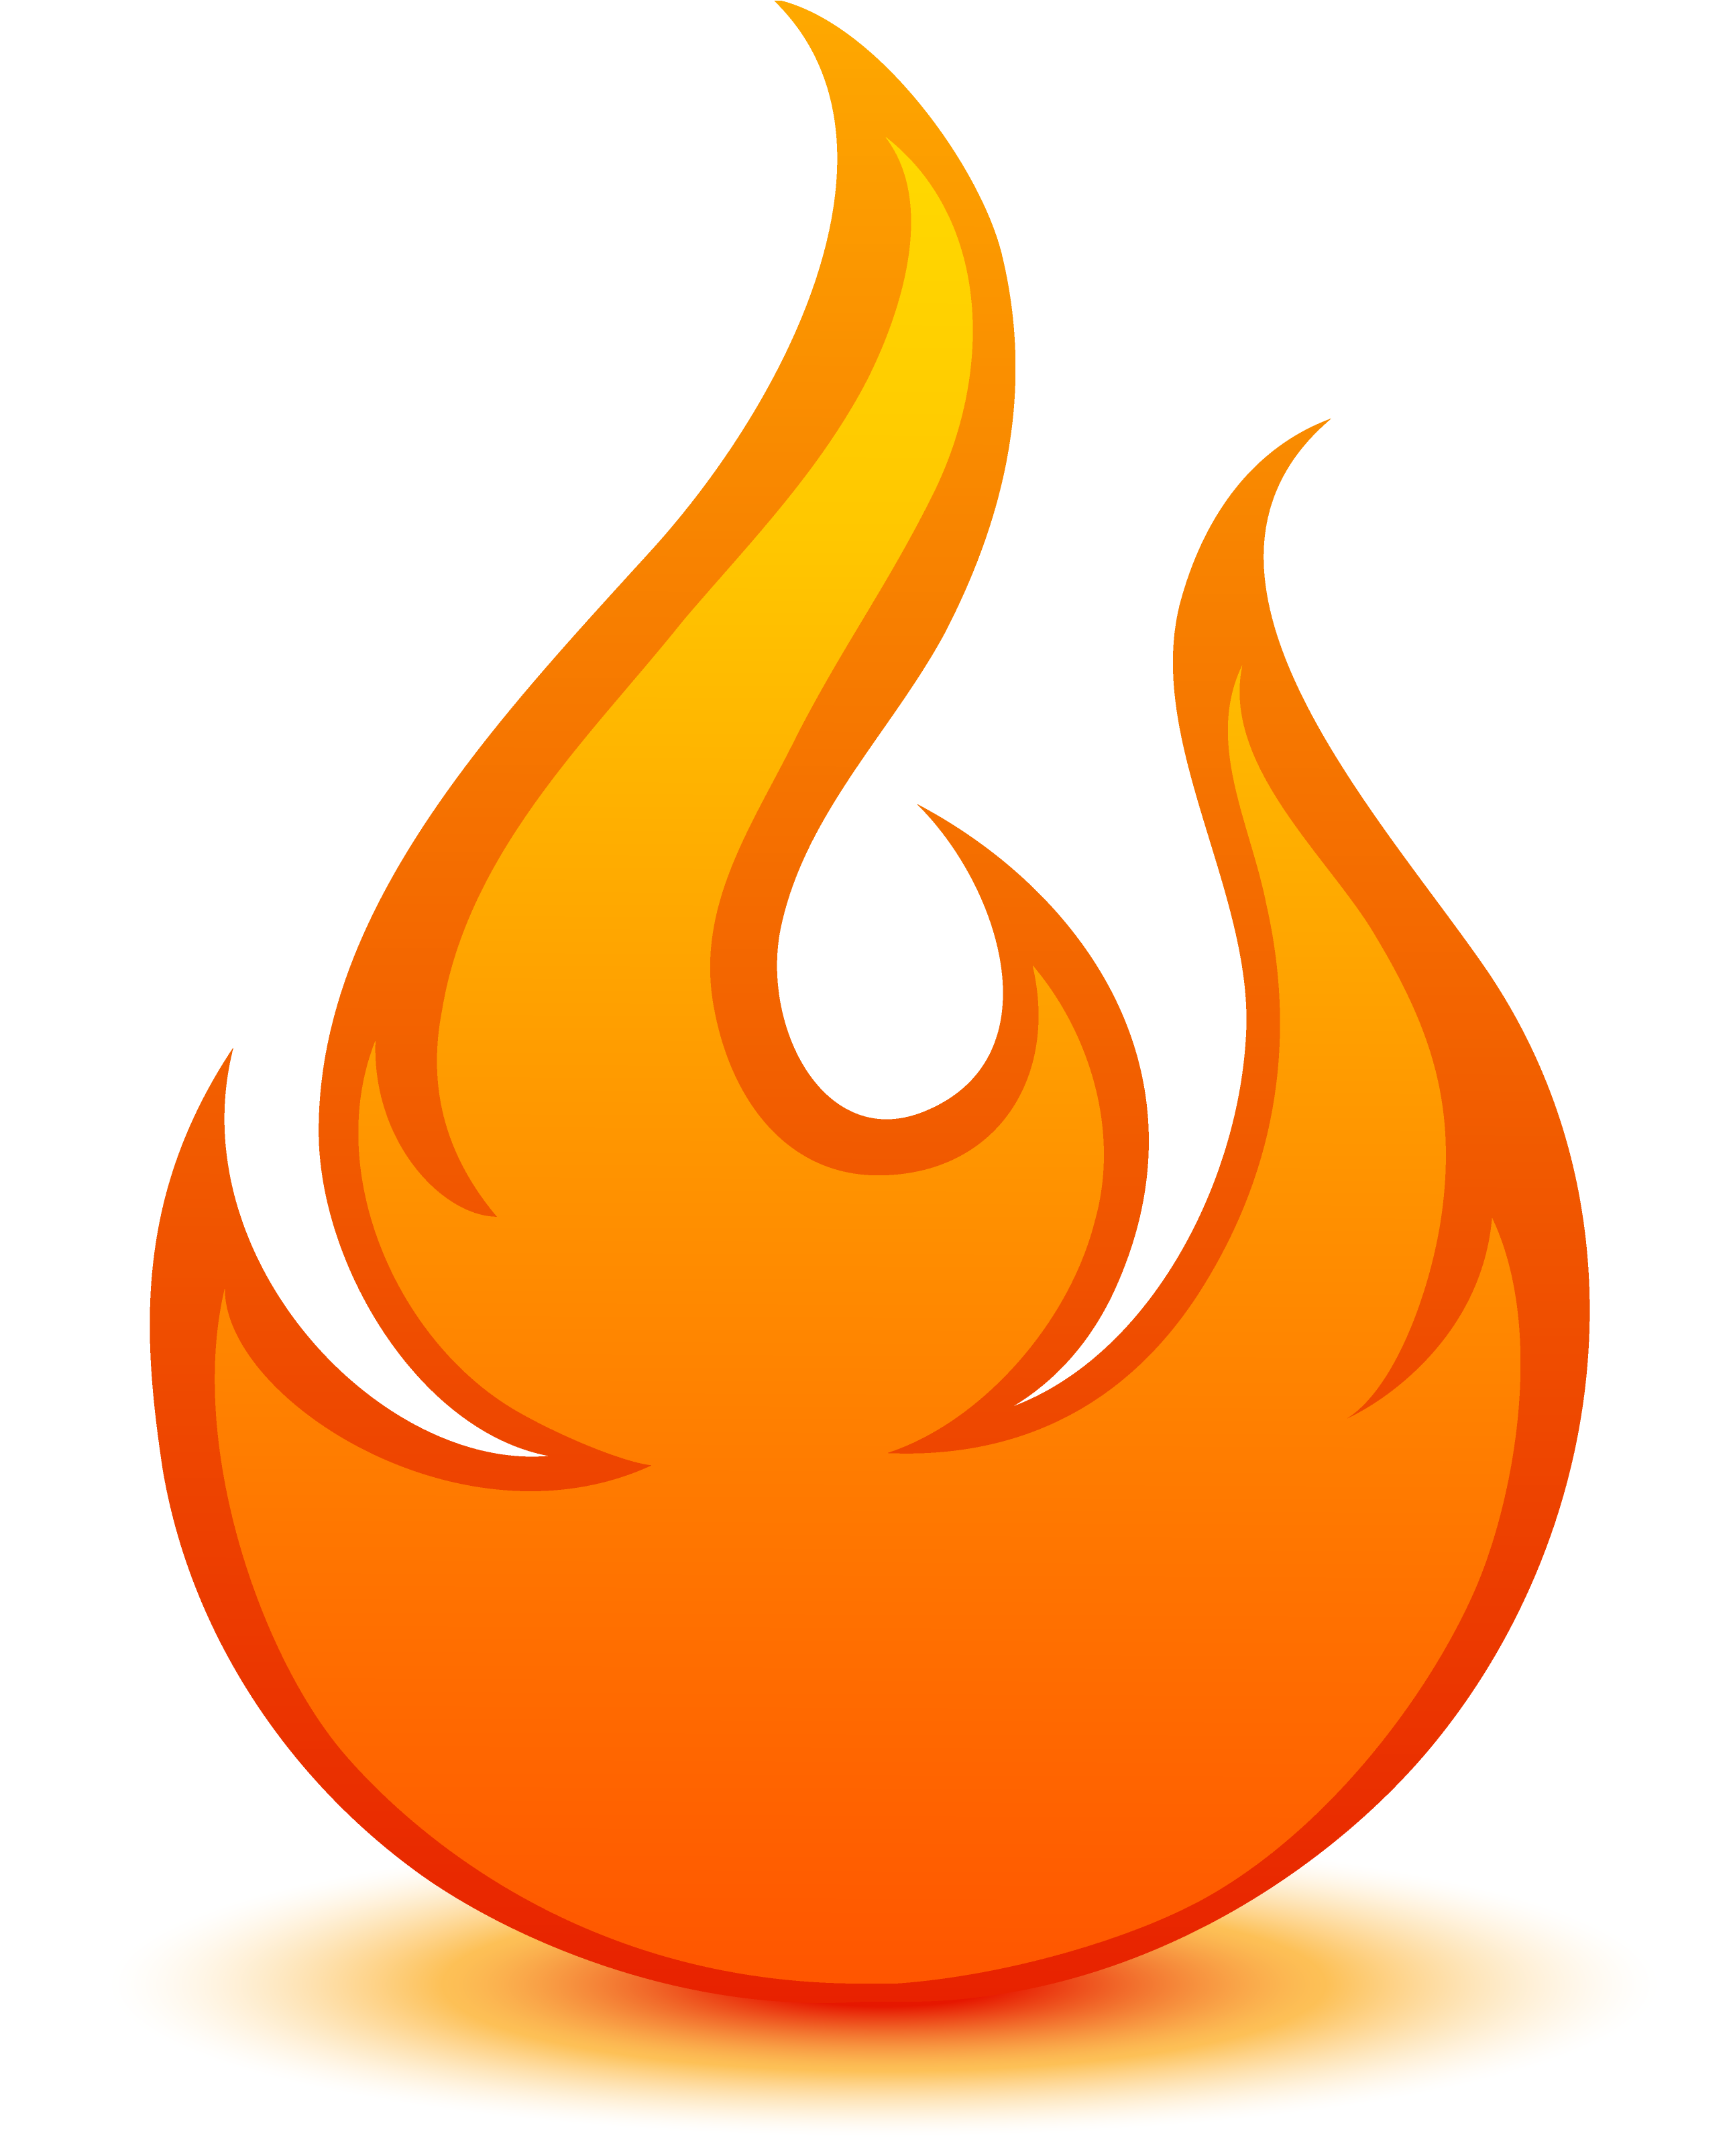 Огонь лого. Значок огня. Огонь логотип. Пламя символ. Символ пламени огня.